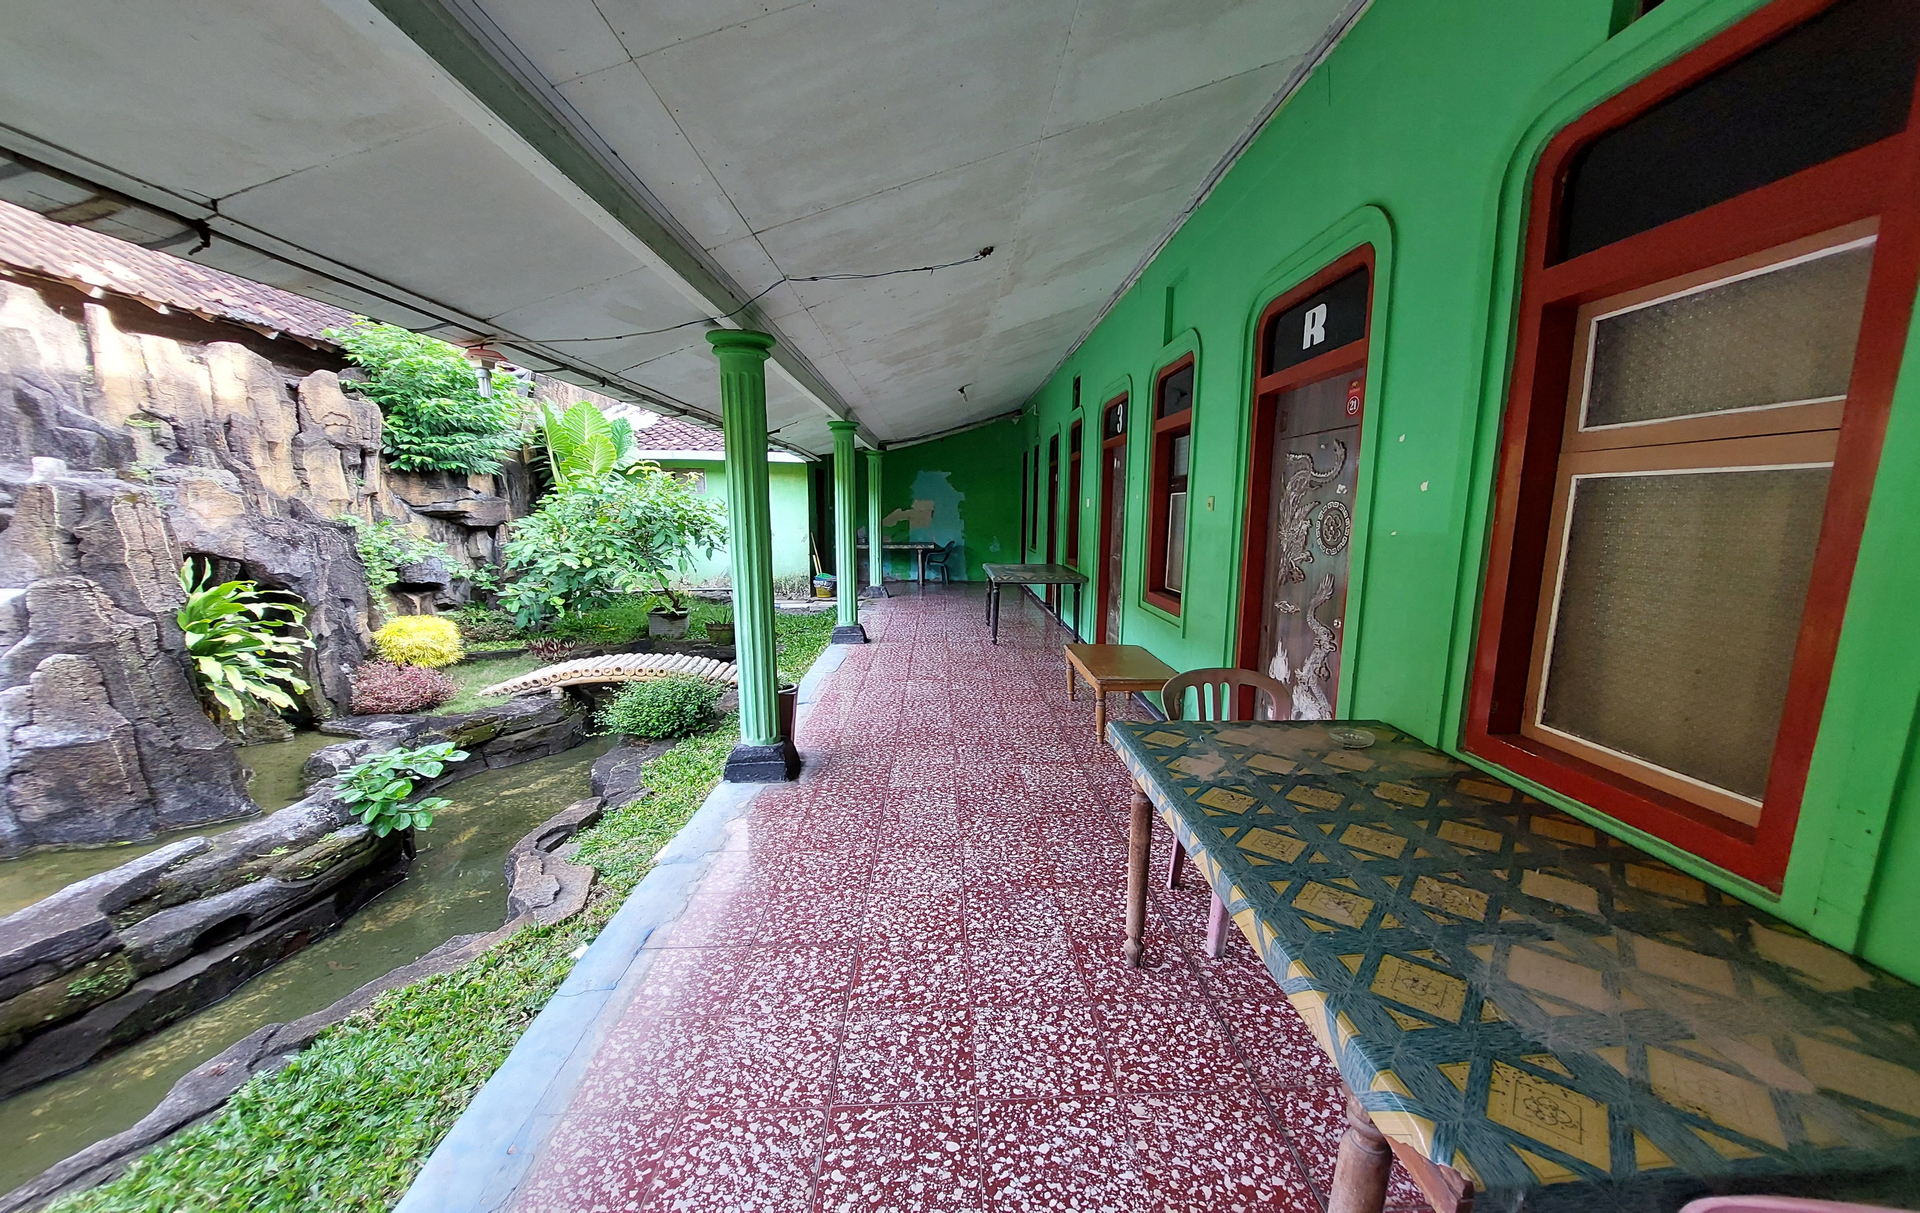 Public Area, Hotel Parangtritis Widodo Tustiyani, Bantul